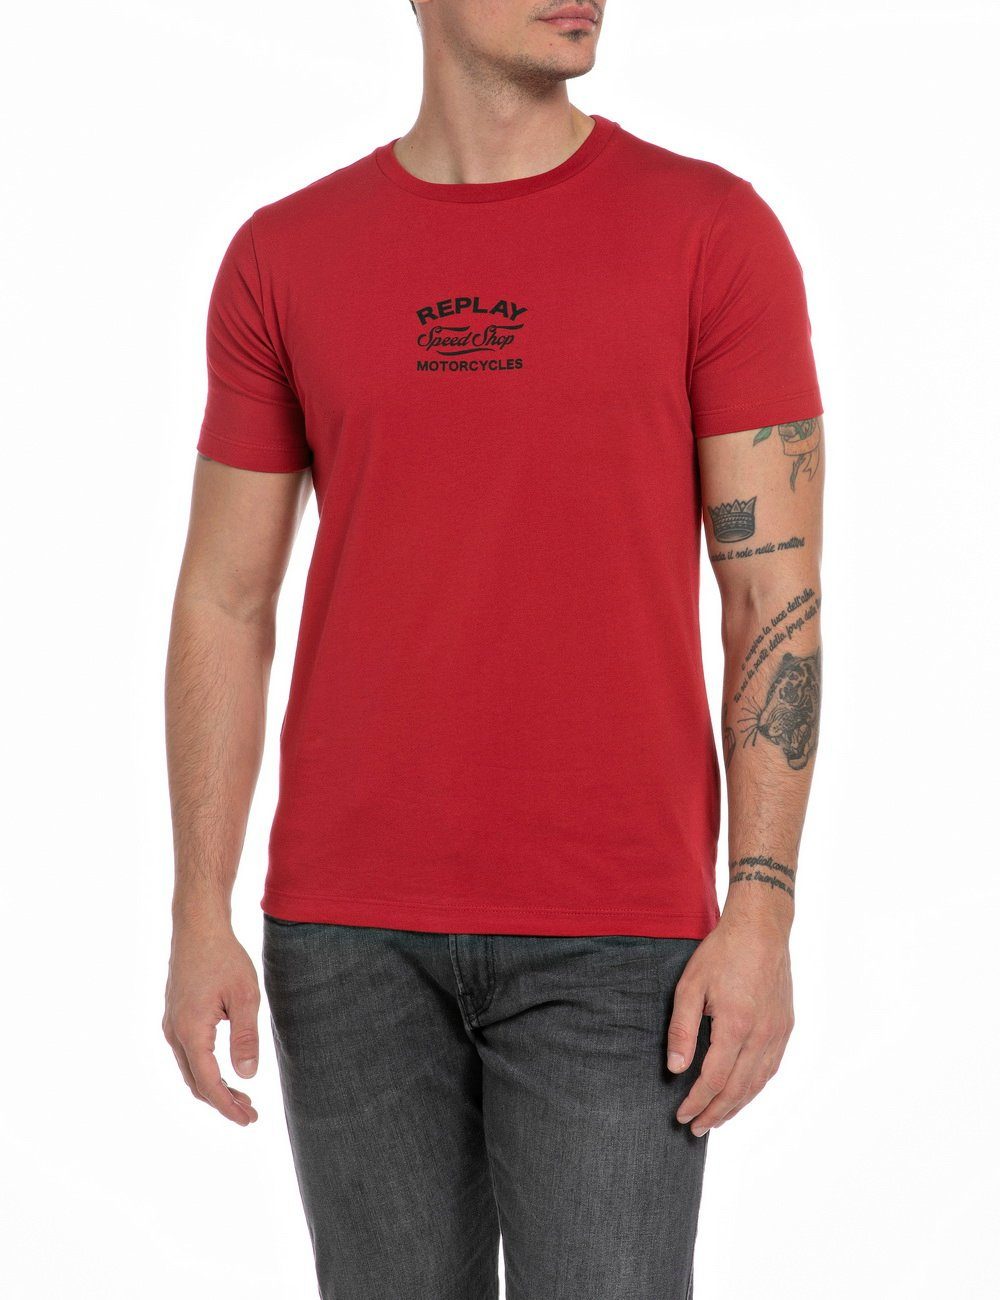 Chili aus (1-tlg) JERSEY Red BP Replay 665 Baumwolle BASIC T-Shirt